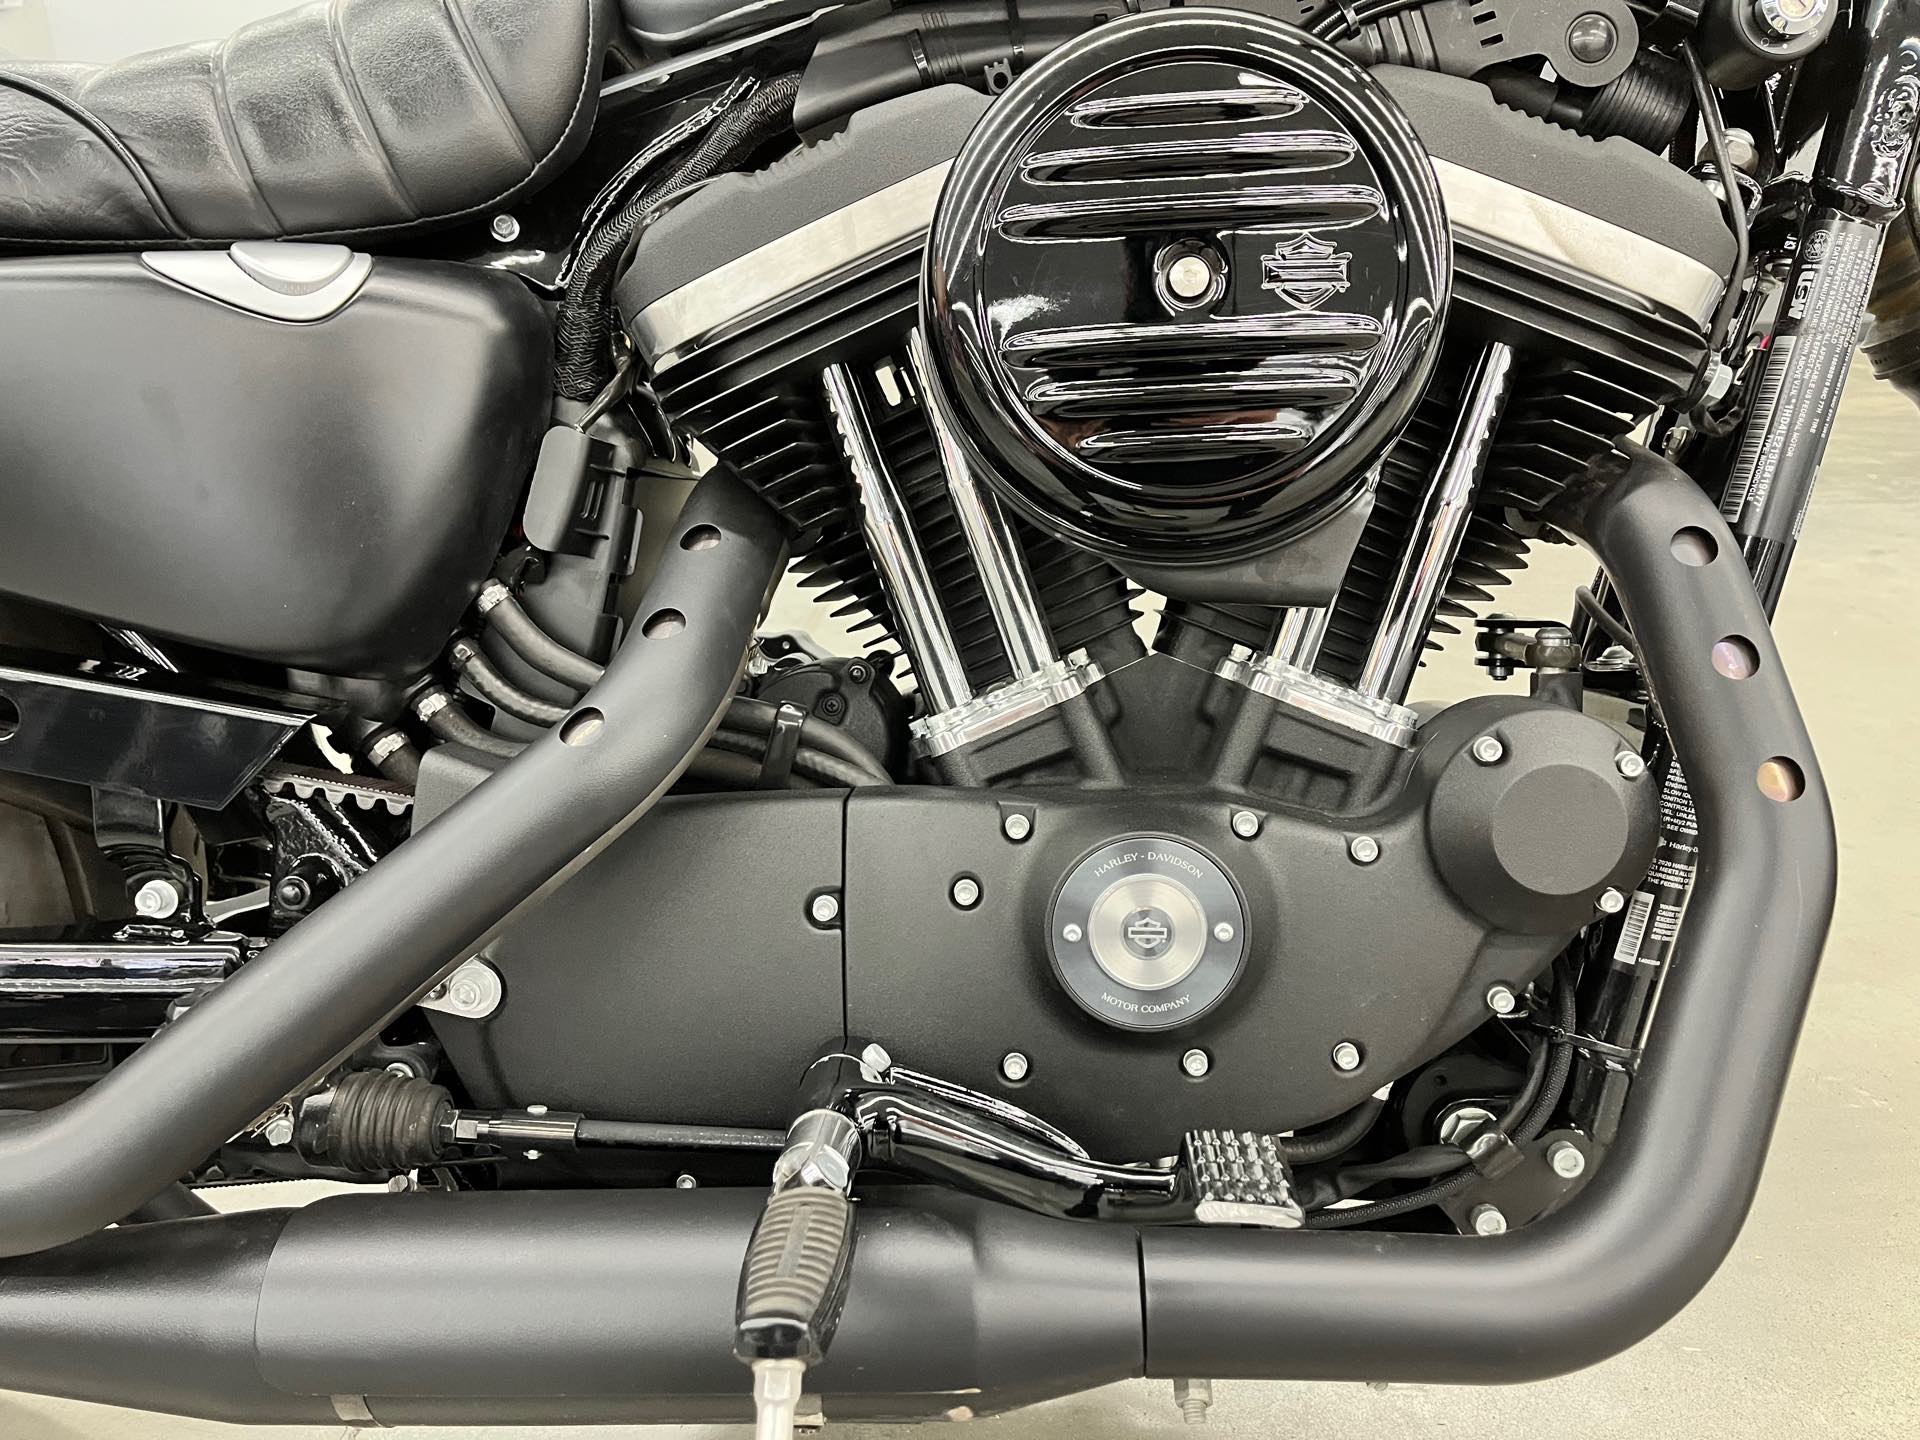 2020 Harley-Davidson Sportster Iron 883 at Aces Motorcycles - Denver